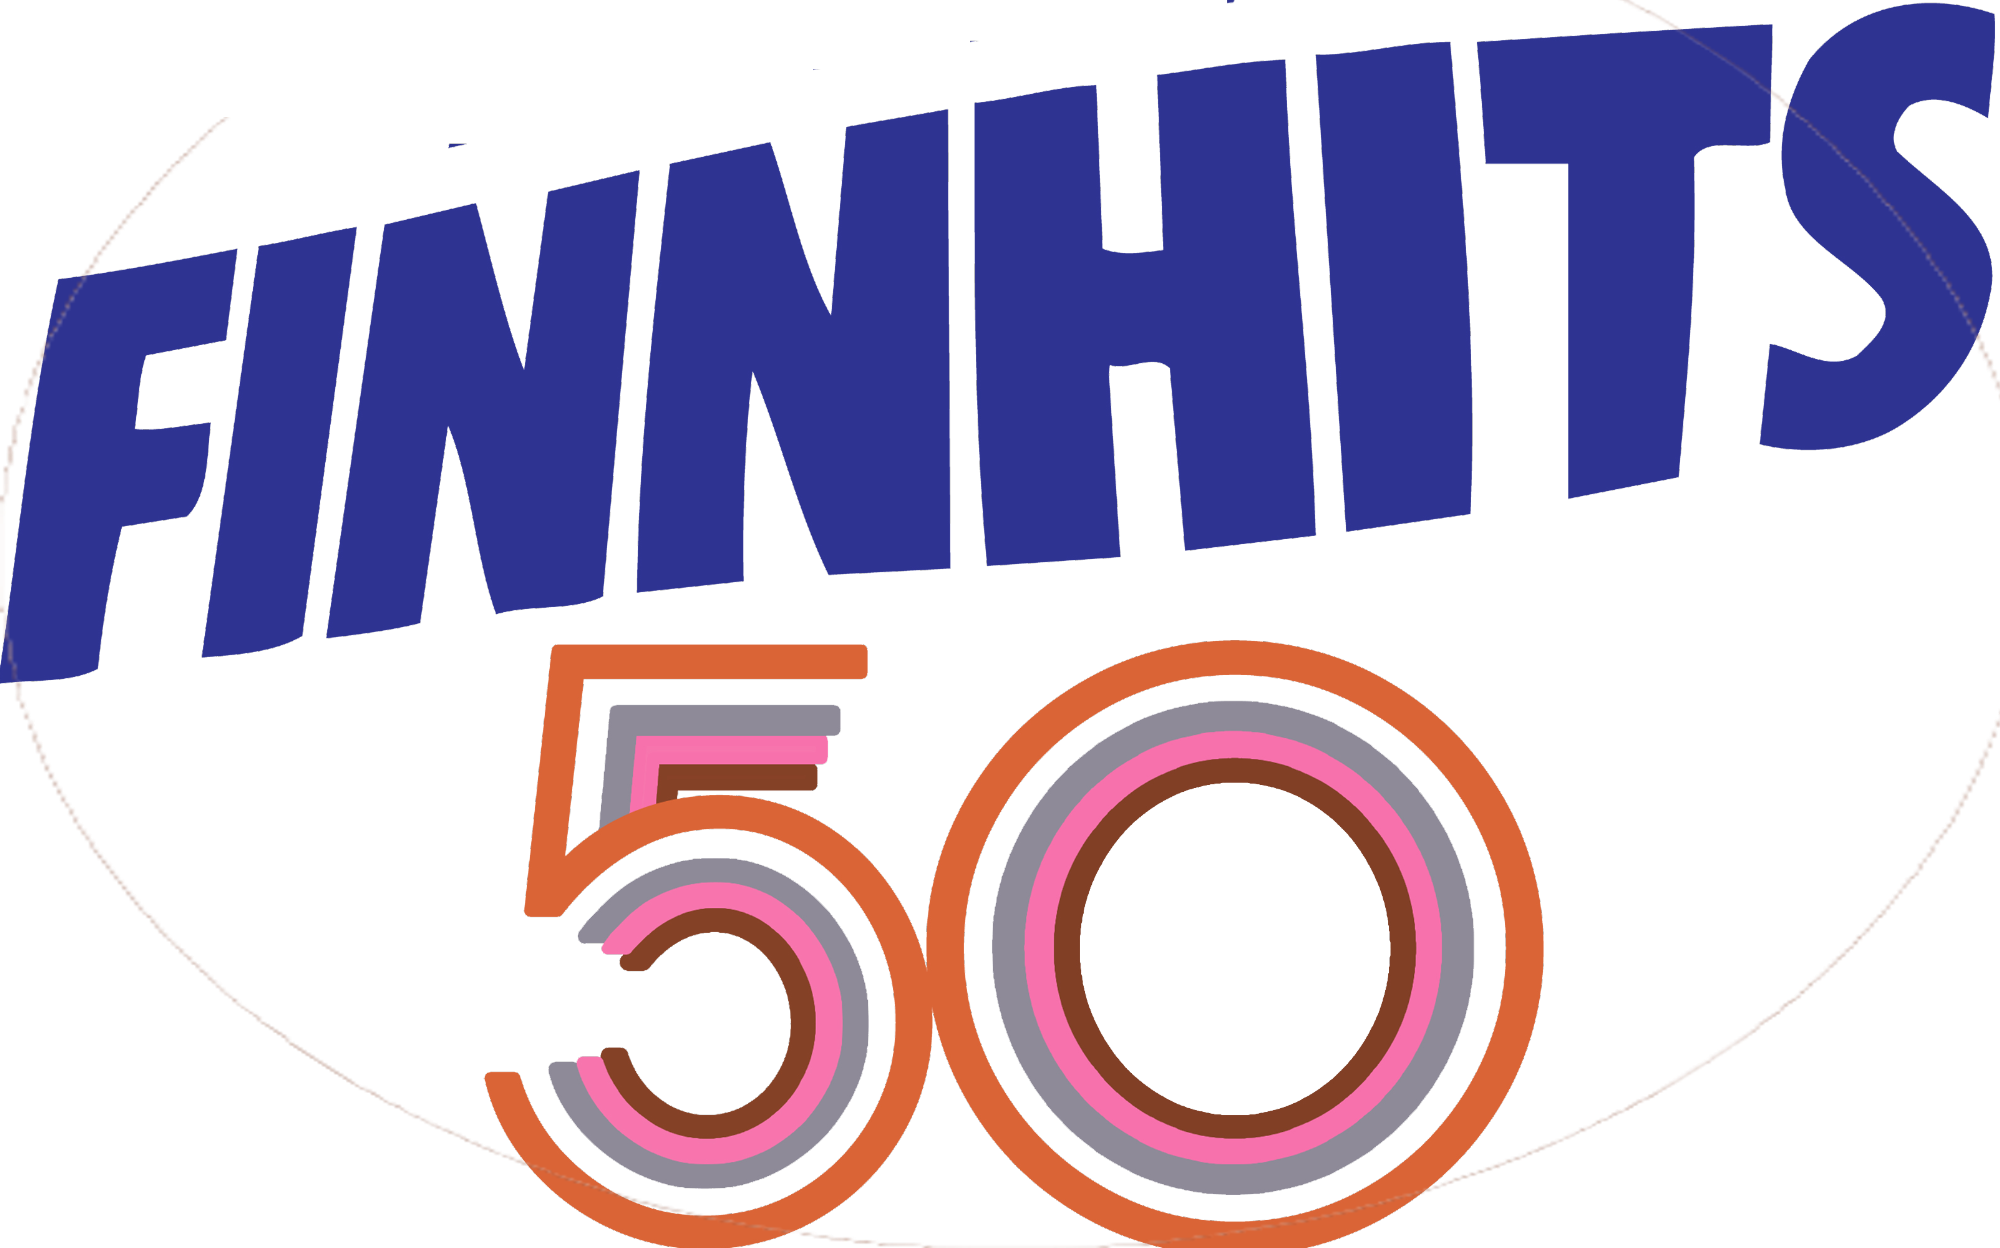 Finnhits 50 logo